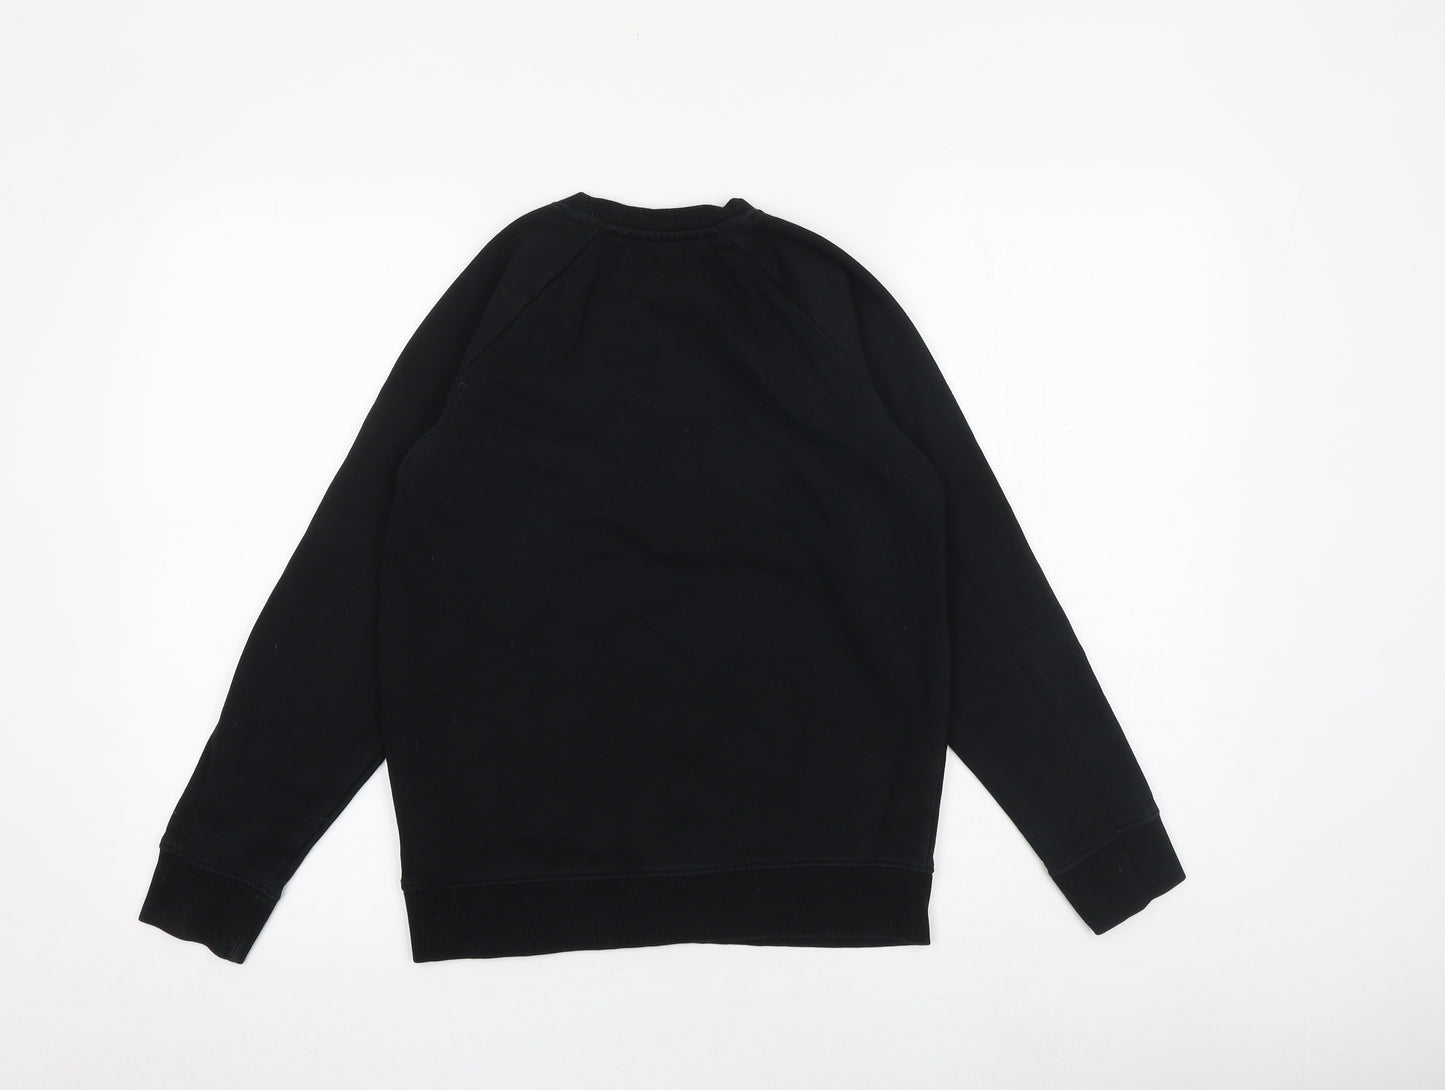 NEXT Boys Black Cotton Pullover Sweatshirt Size 12 Years Pullover